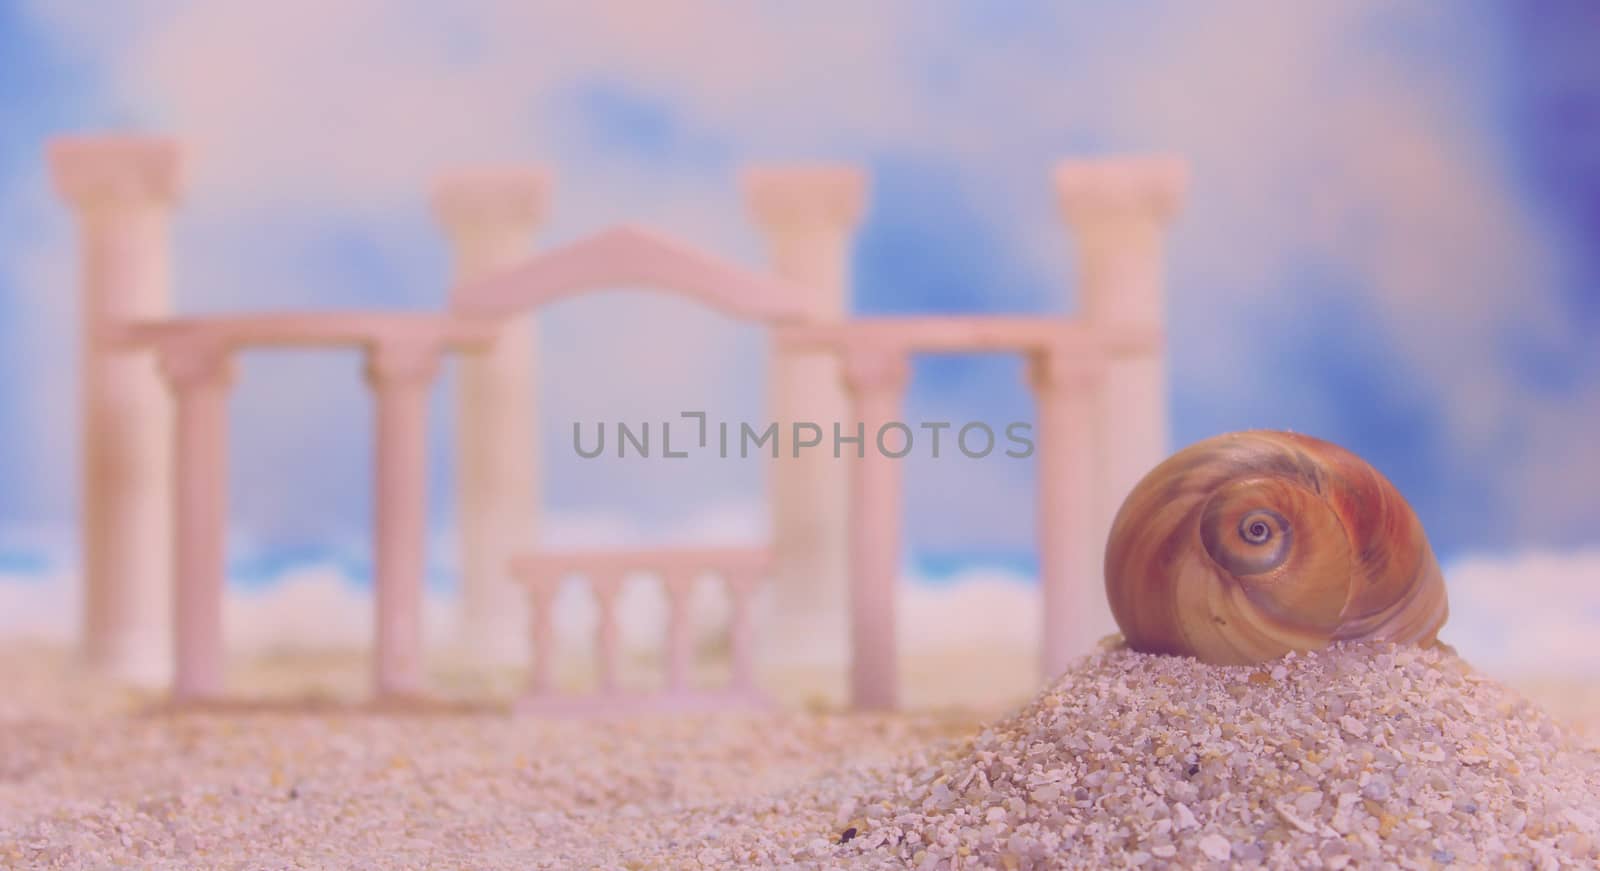 Seashell on Tropical Beach With Roman Style Ruins